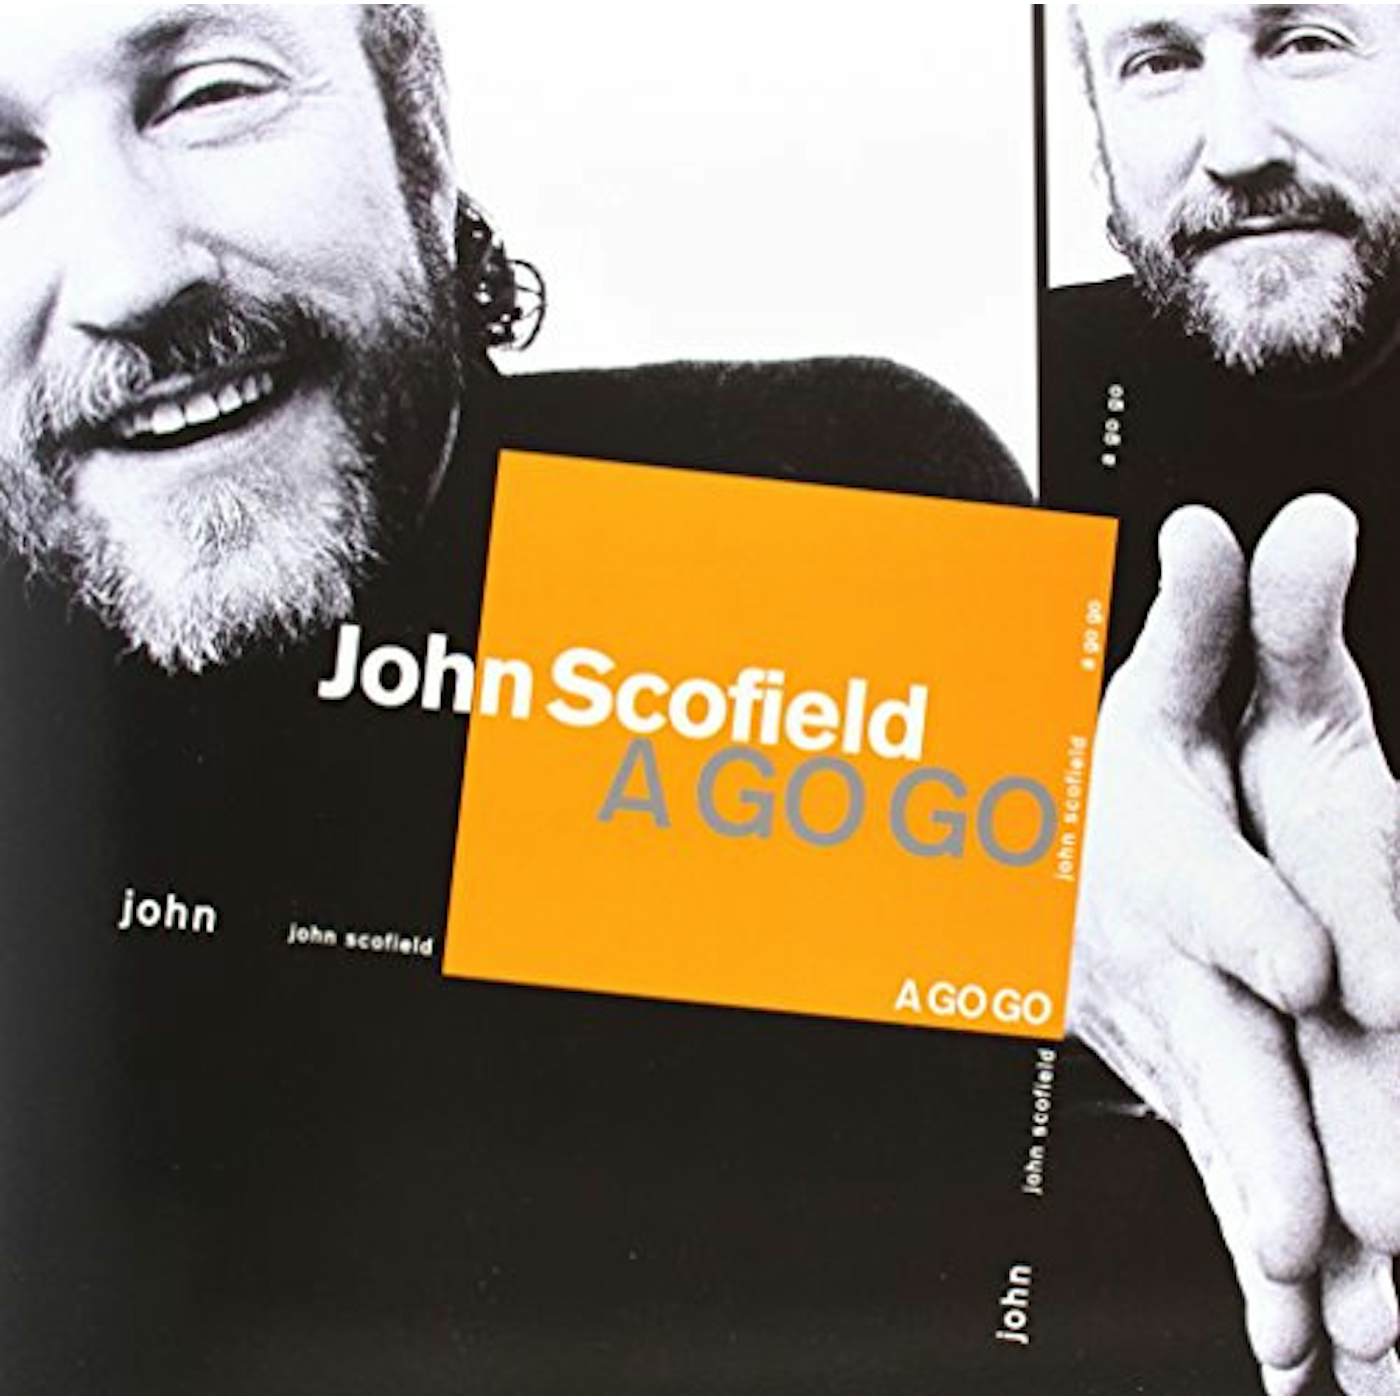 John Scofield A GO GO Vinyl Record